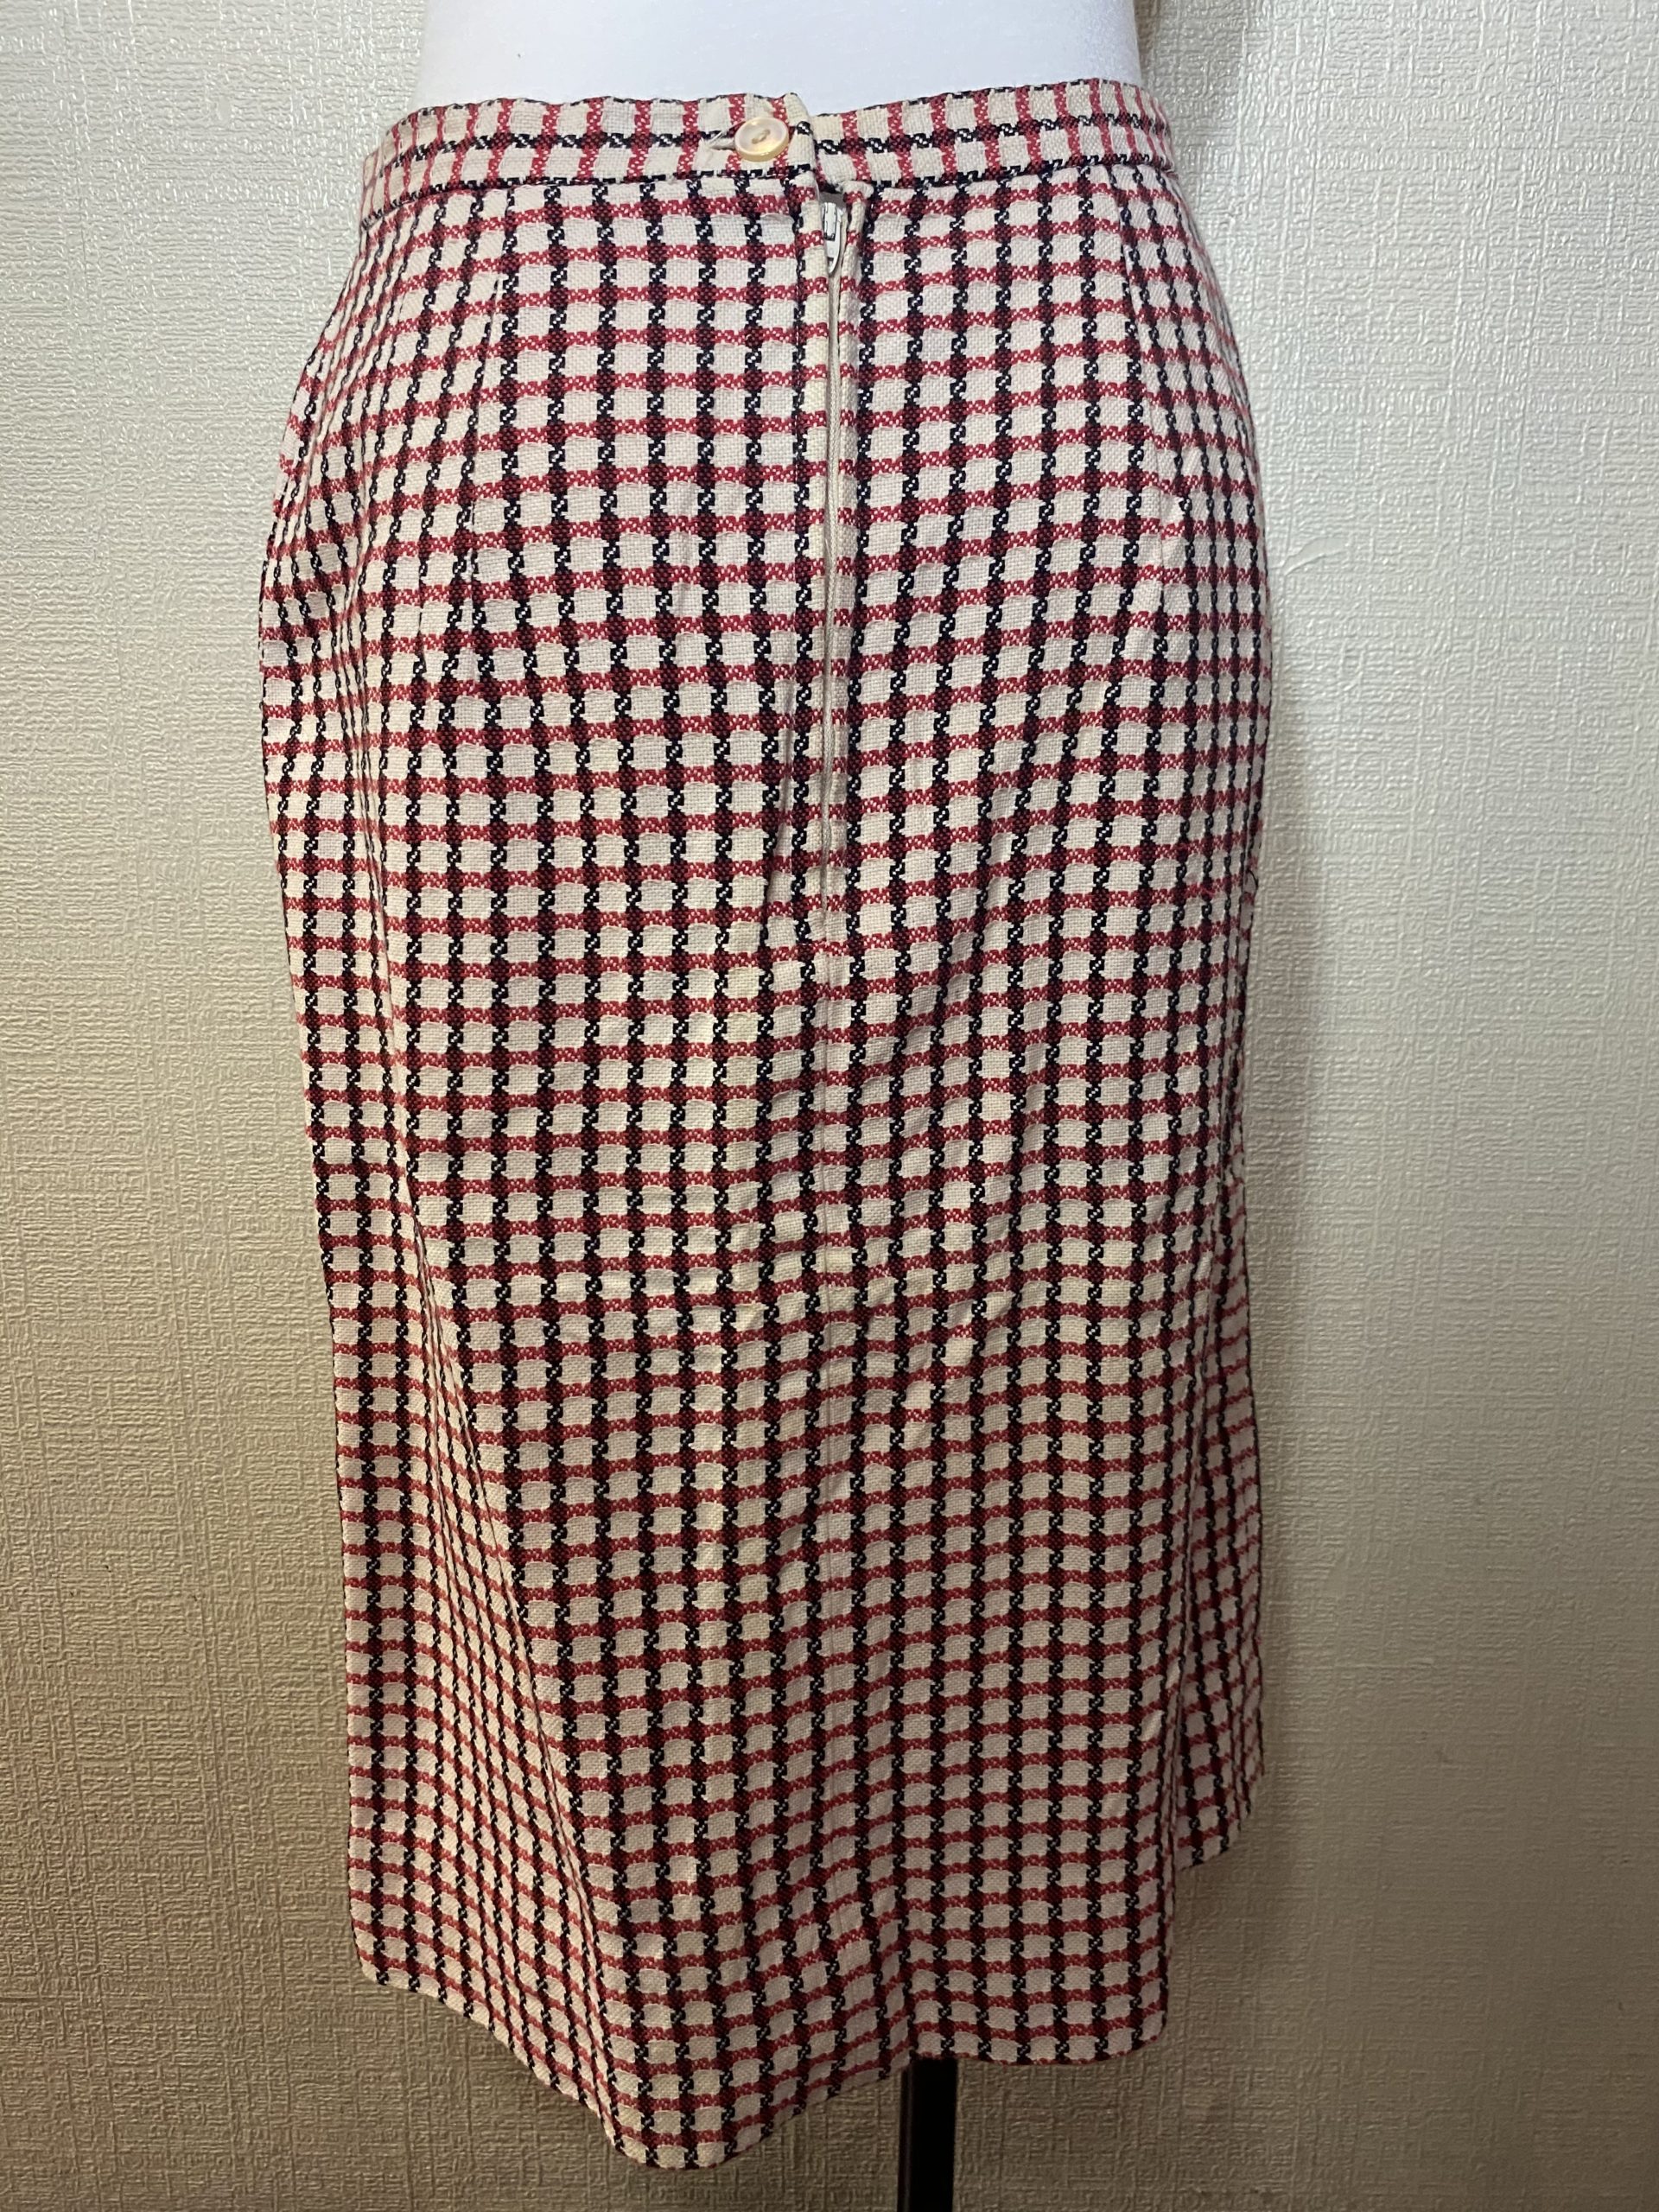 1960s スーツセットアップ 半袖&スカート チェック柄 | 京都 